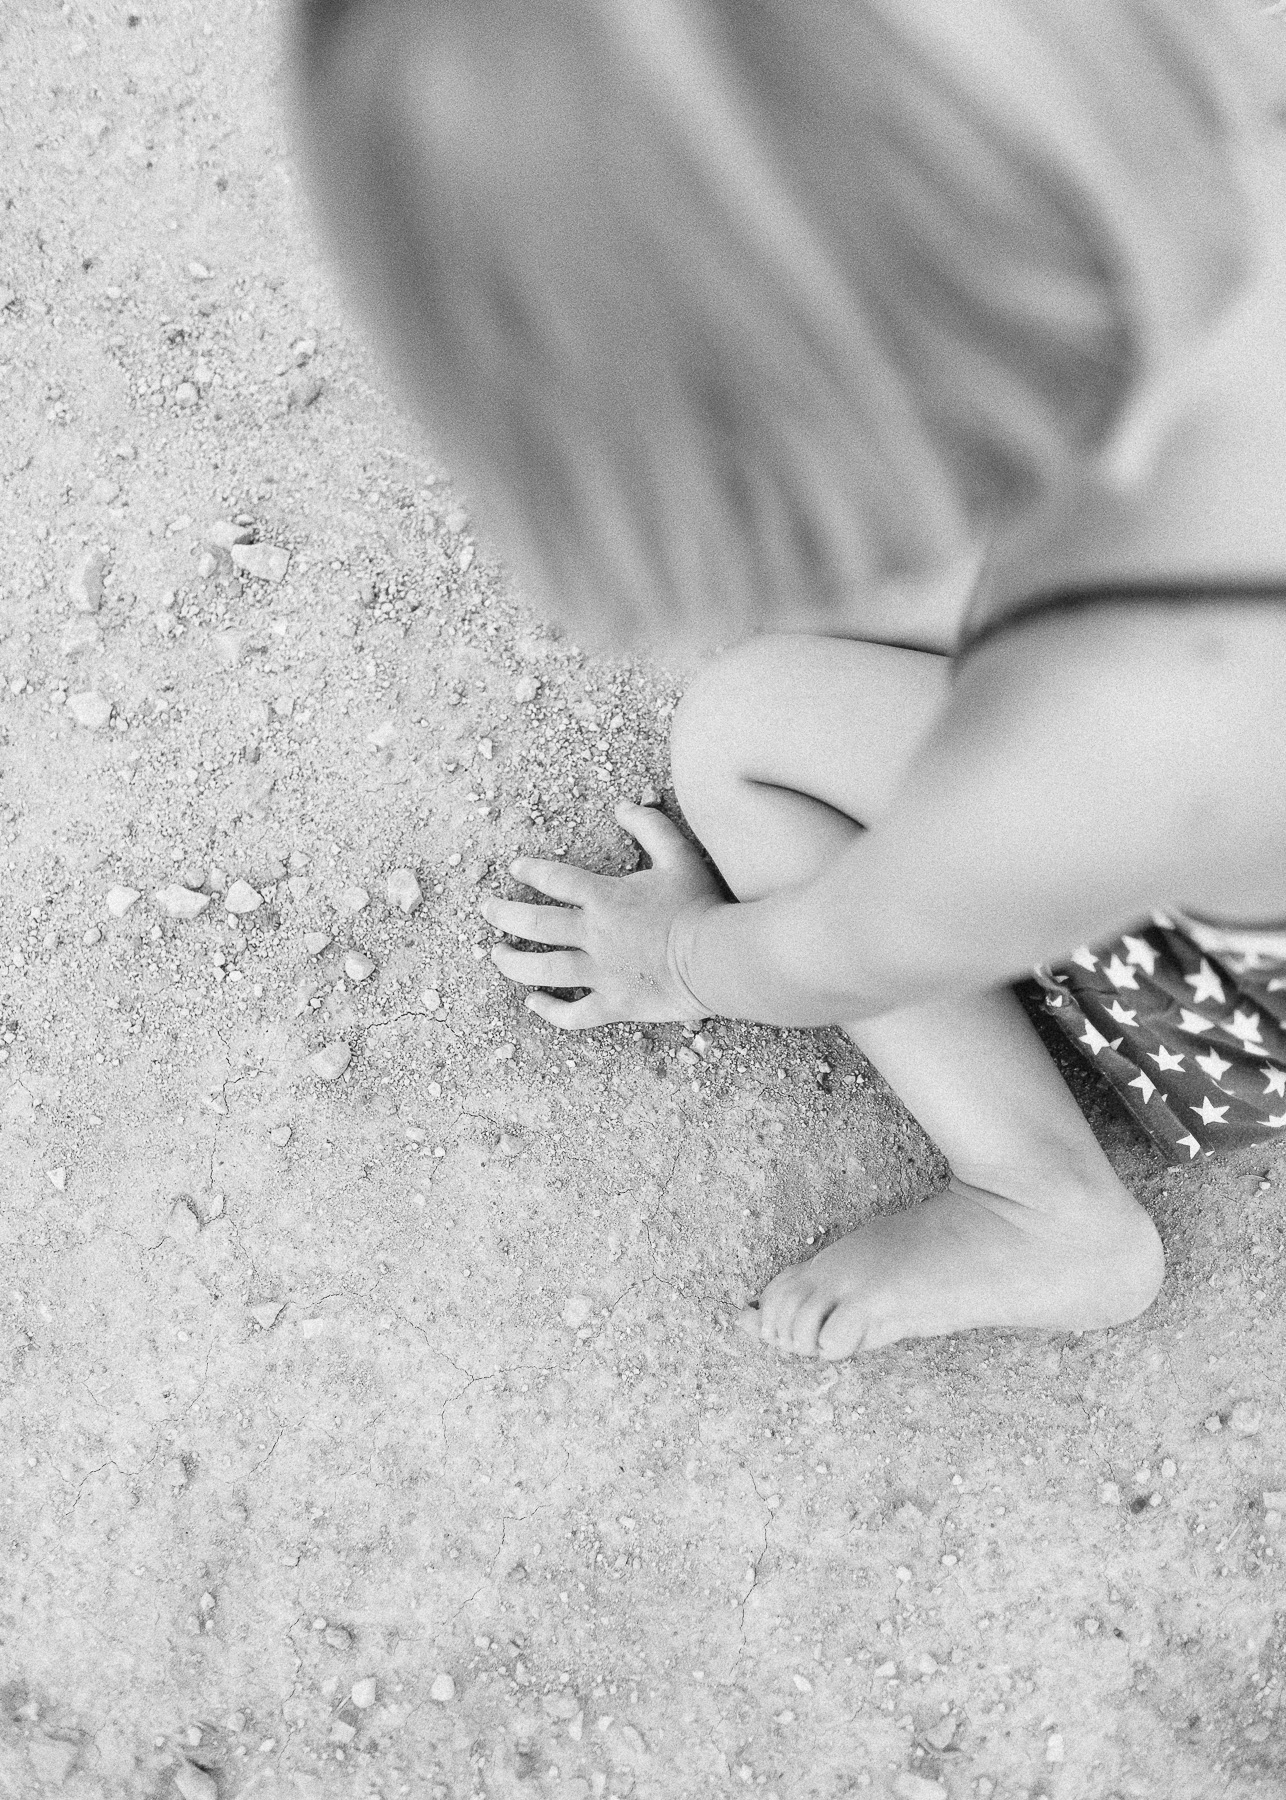 girls feet and hands in dirt